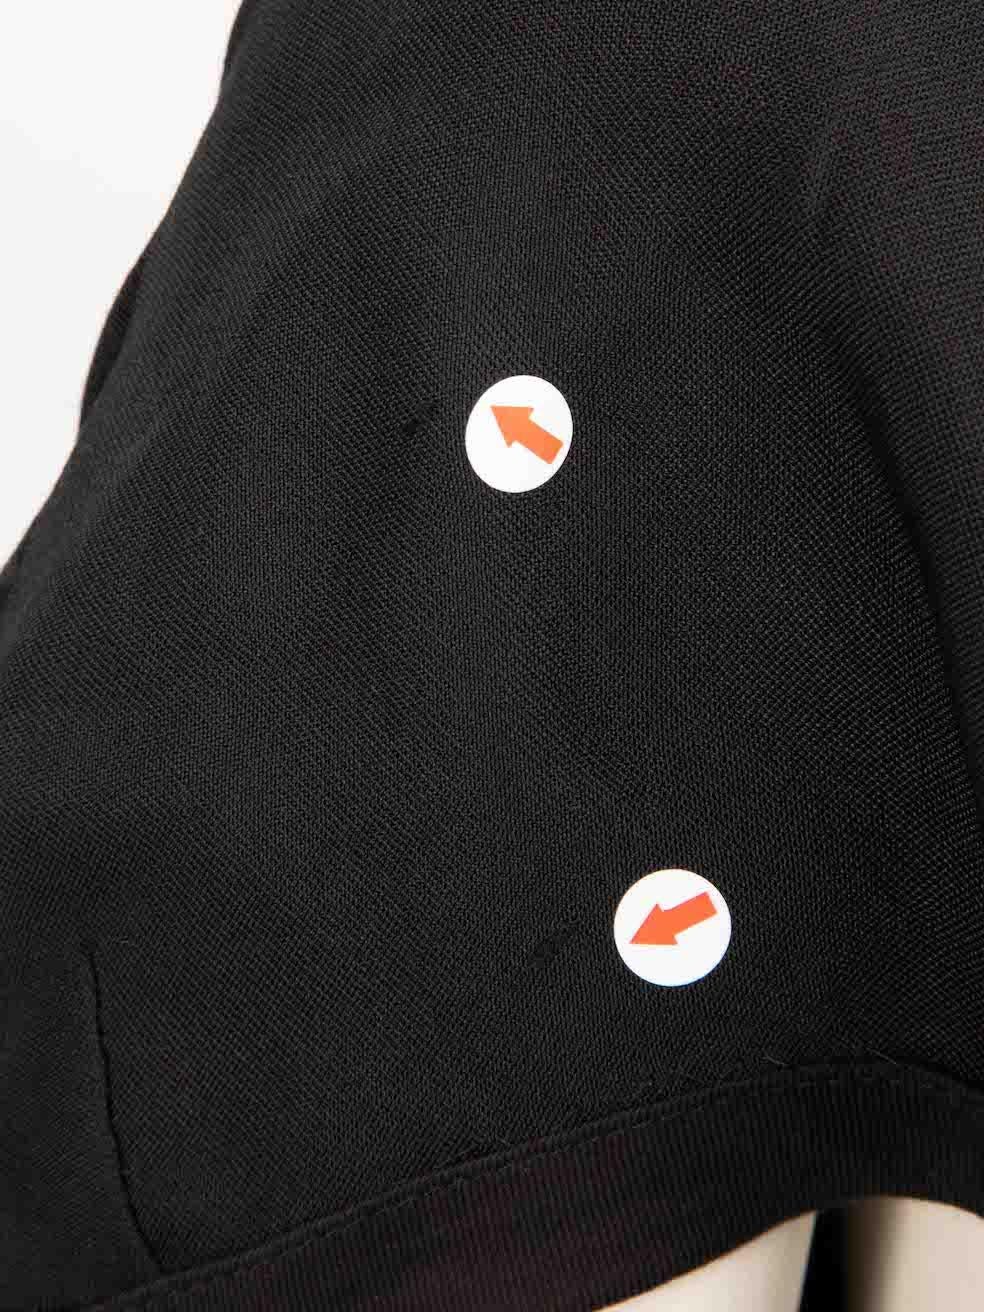 Women's Yohji Yamamoto Black Cap Sleeve Midi Dress Size M For Sale